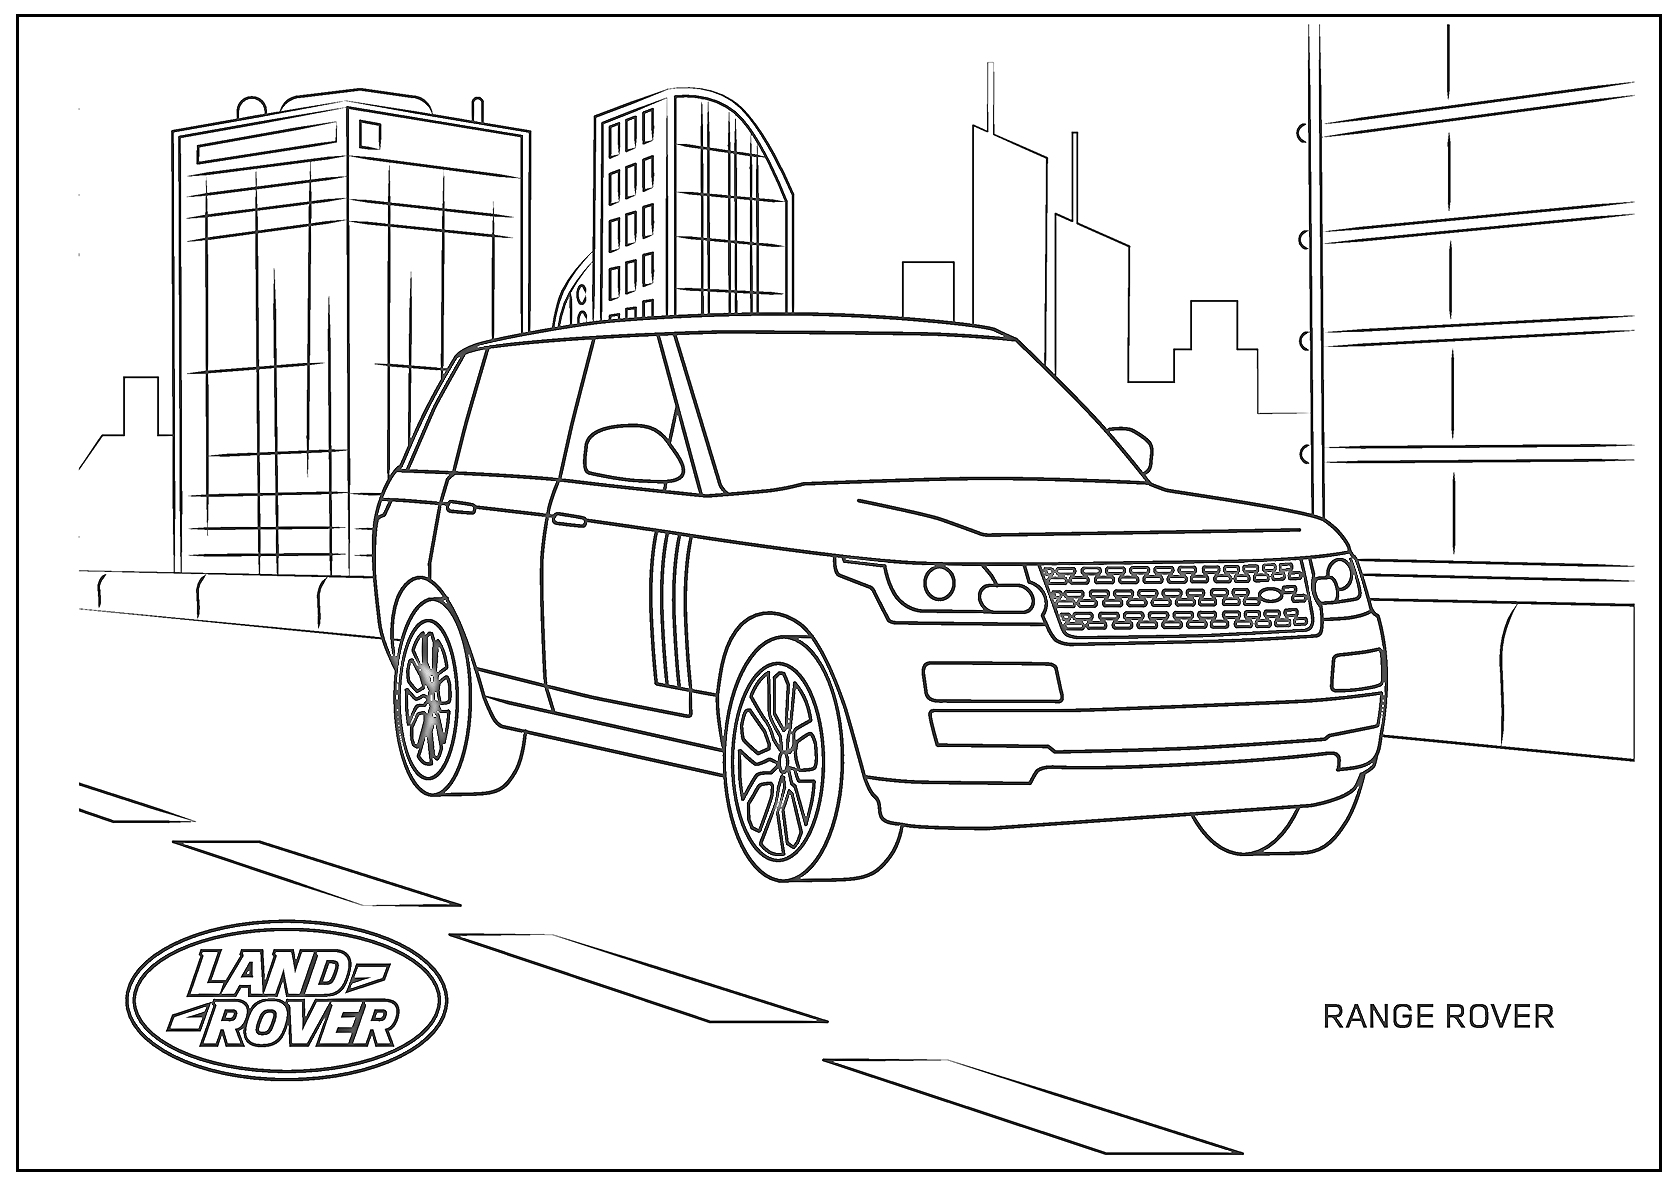 Range Rover на фоне городской застройки